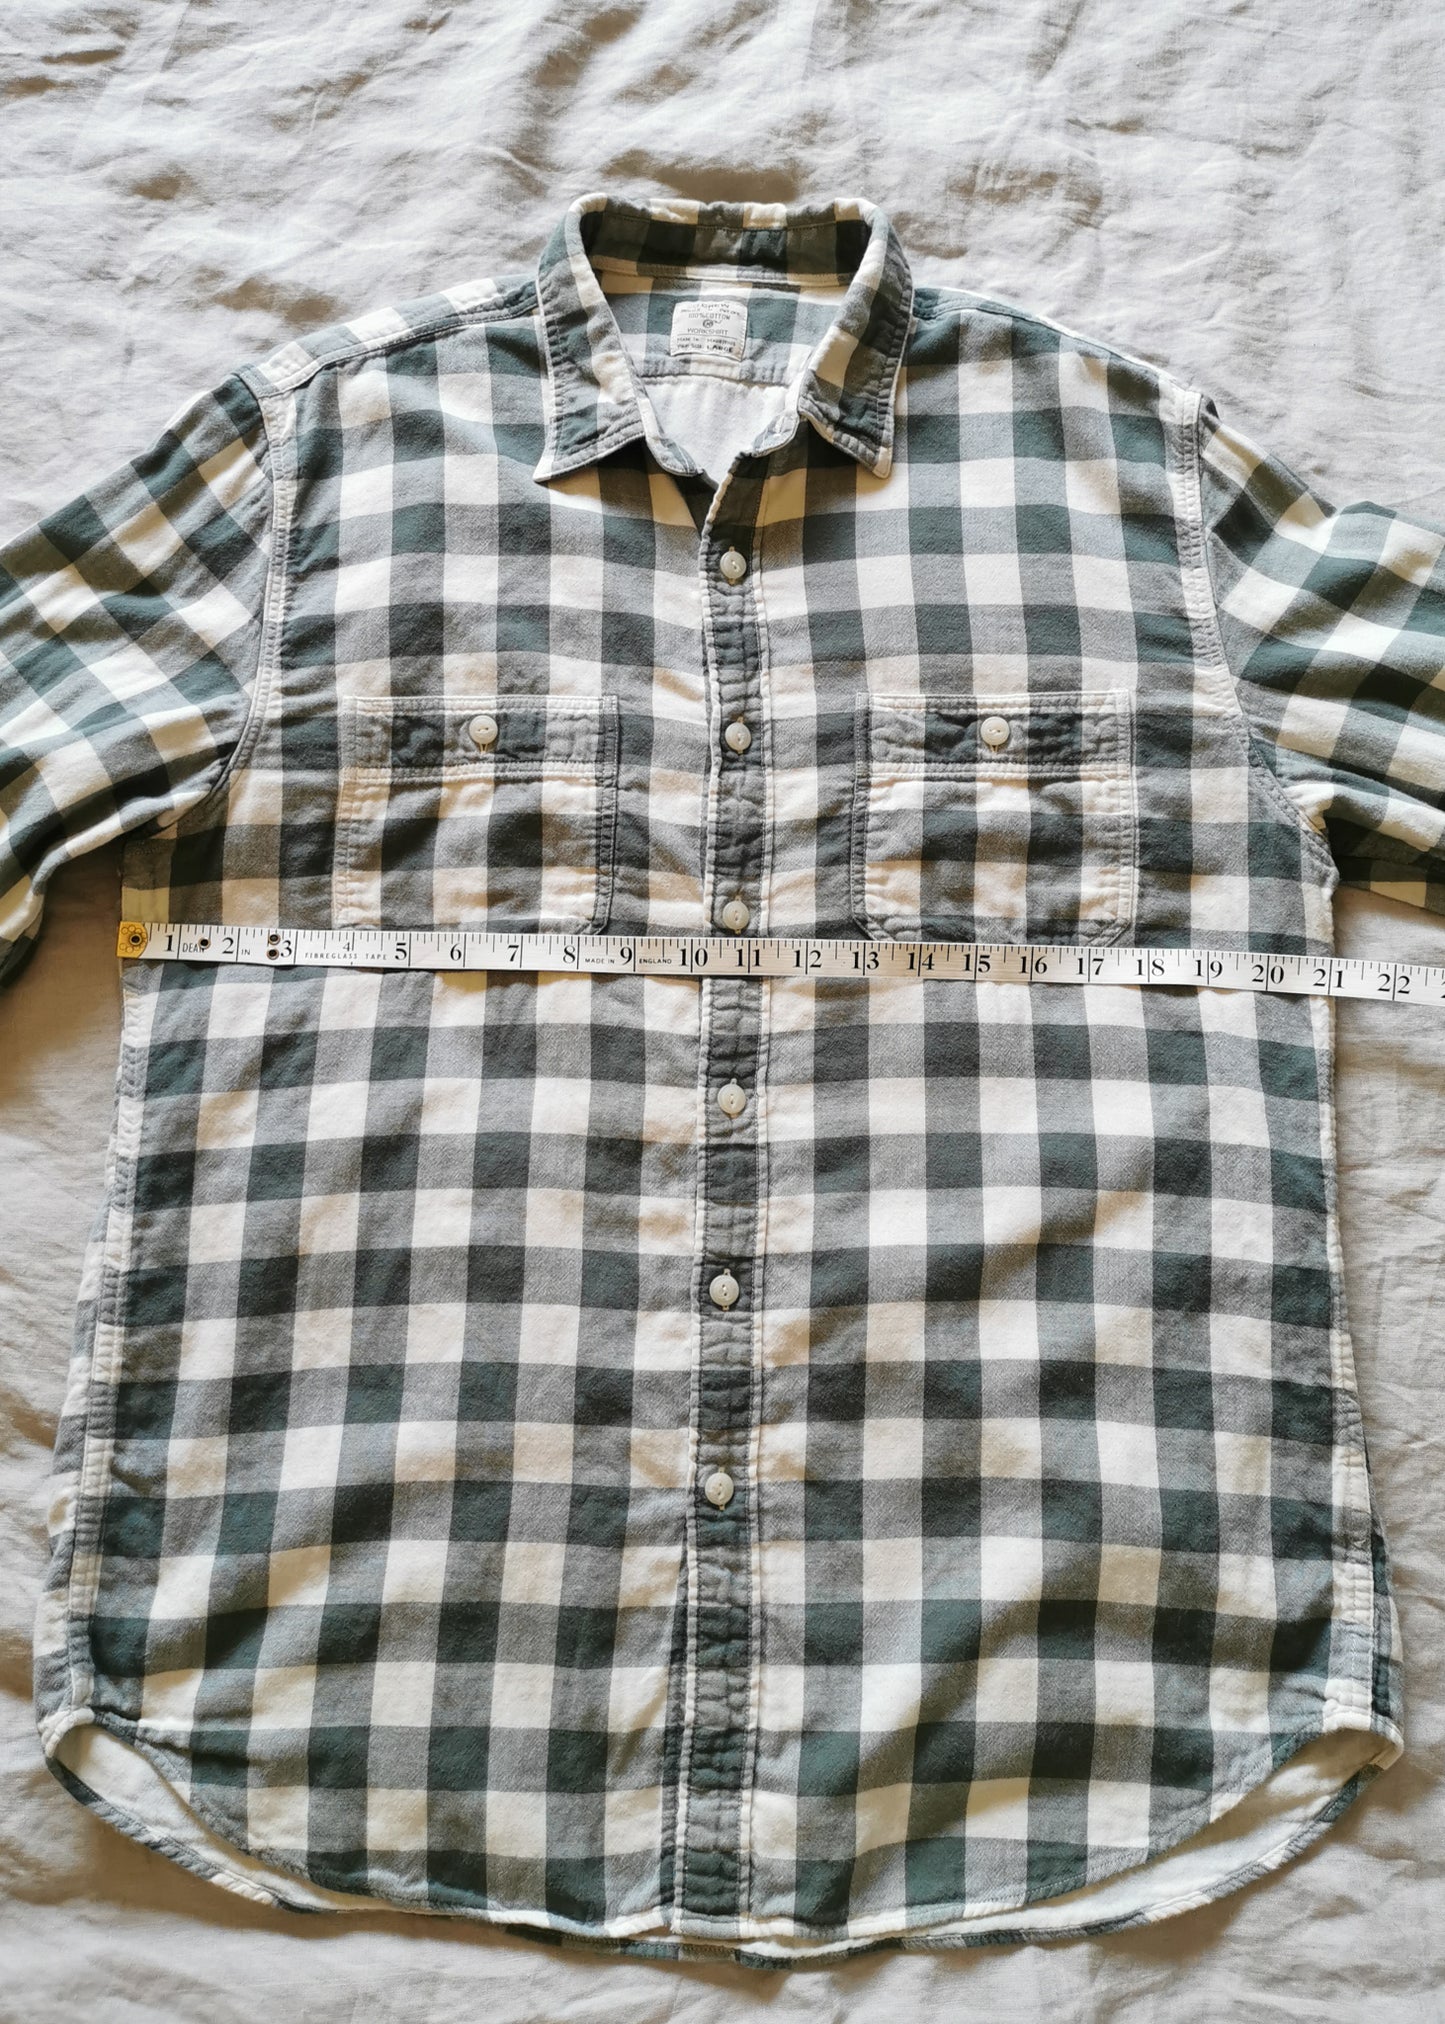 J. Crew Cotton Shirt (L)